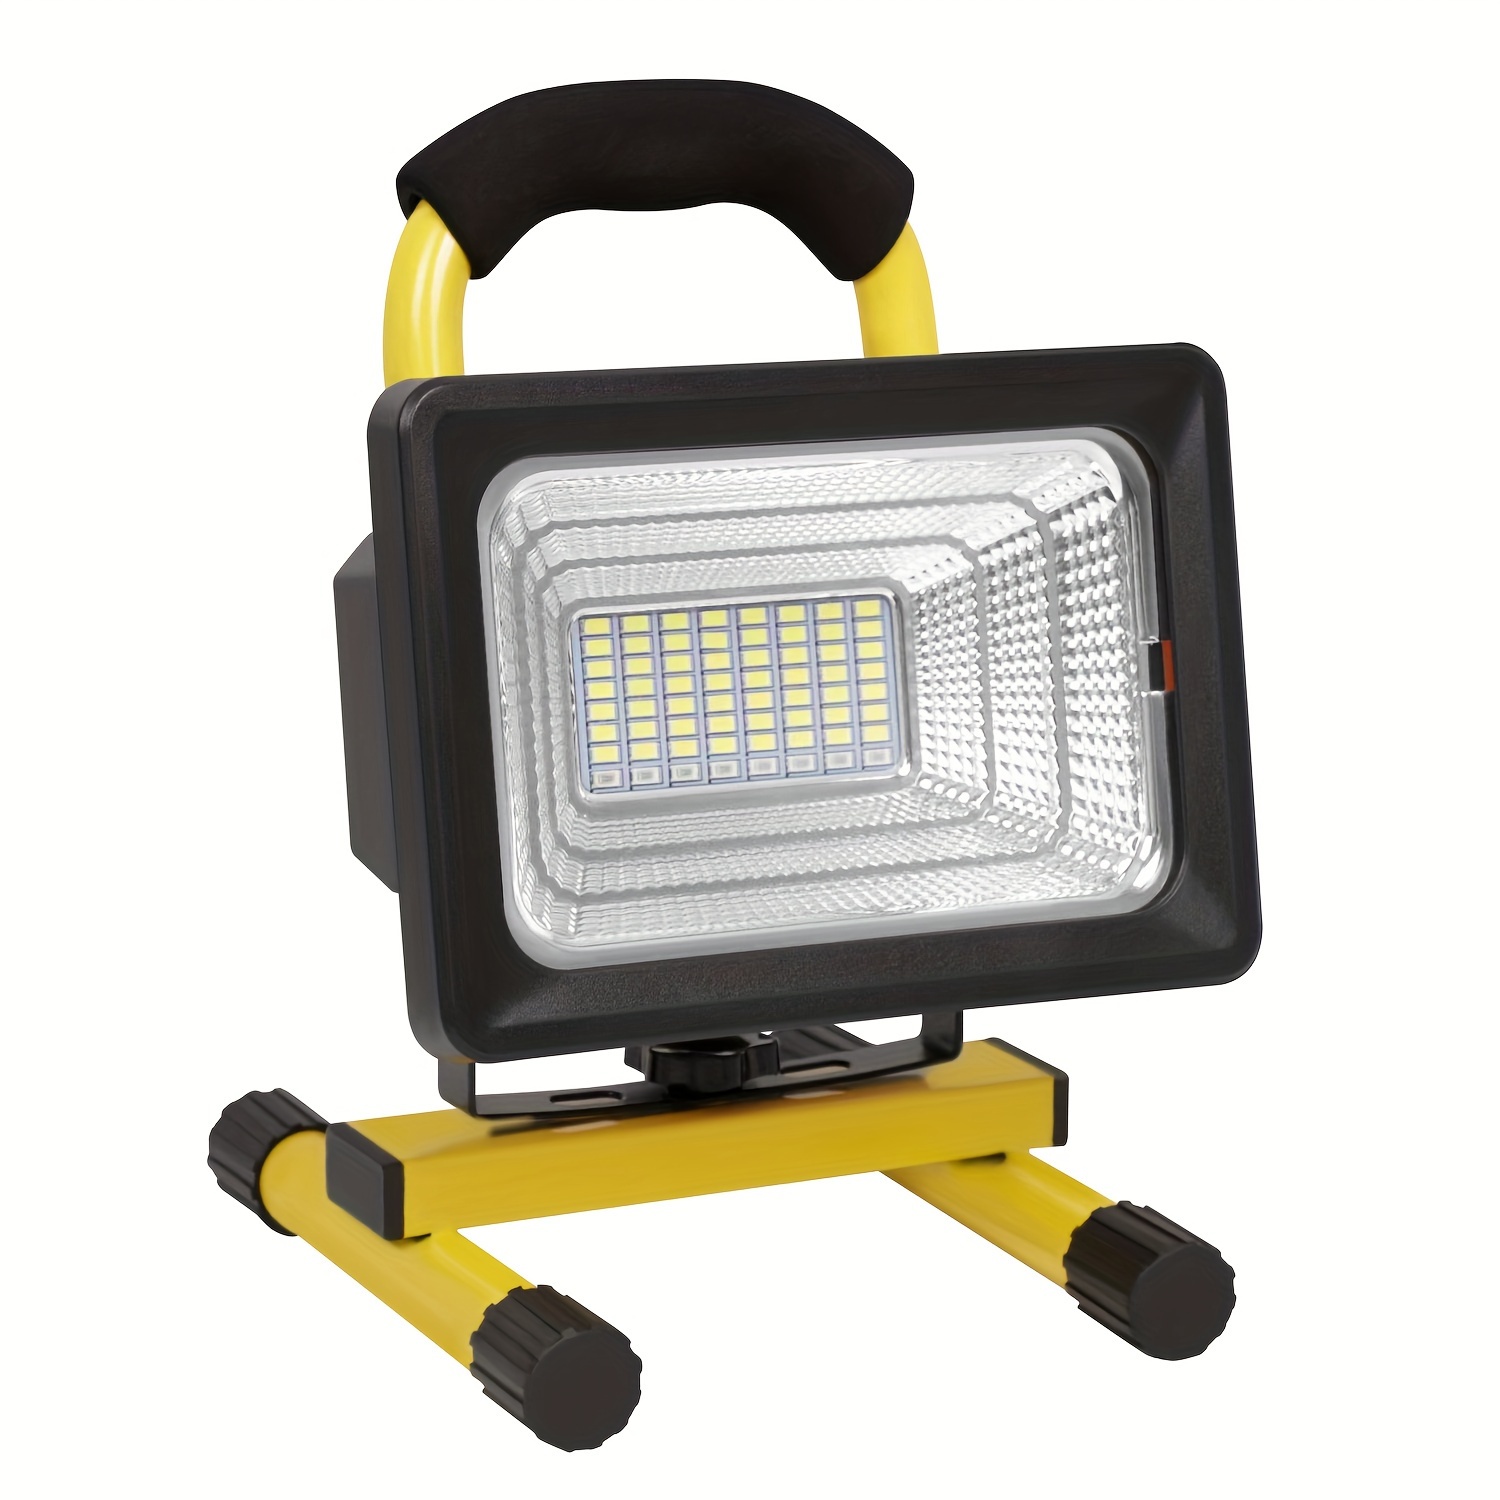 

100w Portable Led Work Light, 10000lm Super Bright Waterproof Flood Light, Rechargeable Battery Cordless Job Site Light For Garage Workshop Car Outdoor Lighting